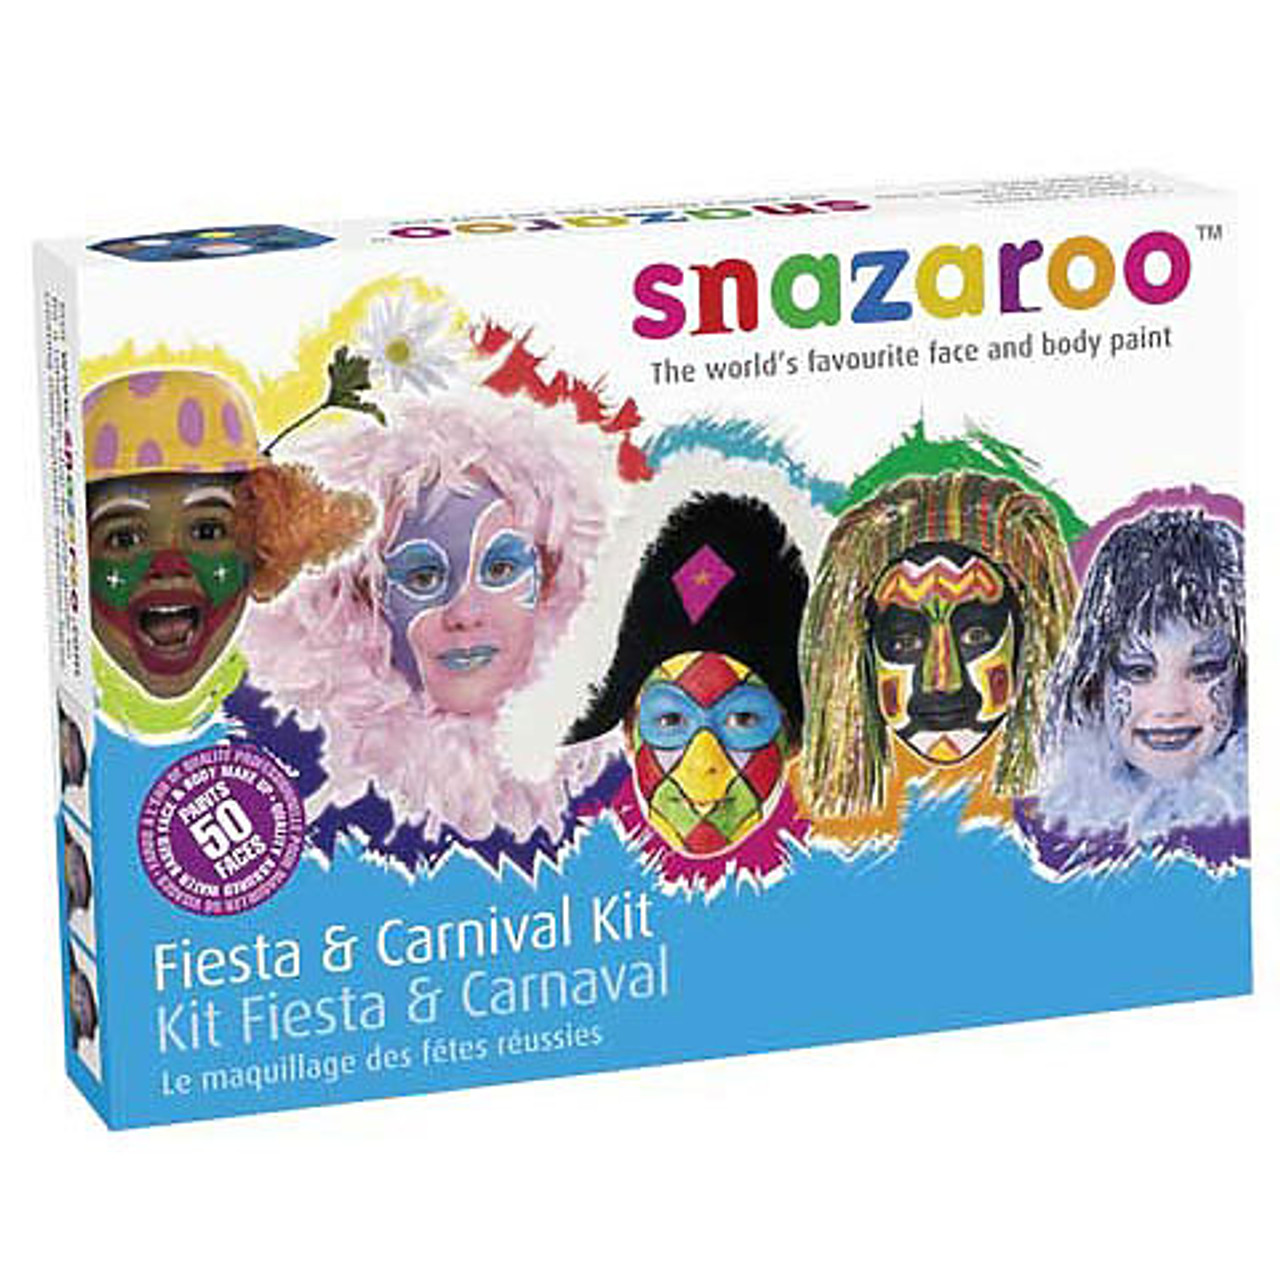 Snazaroo Face Painting Palette Kit - Boys (8 Colors)